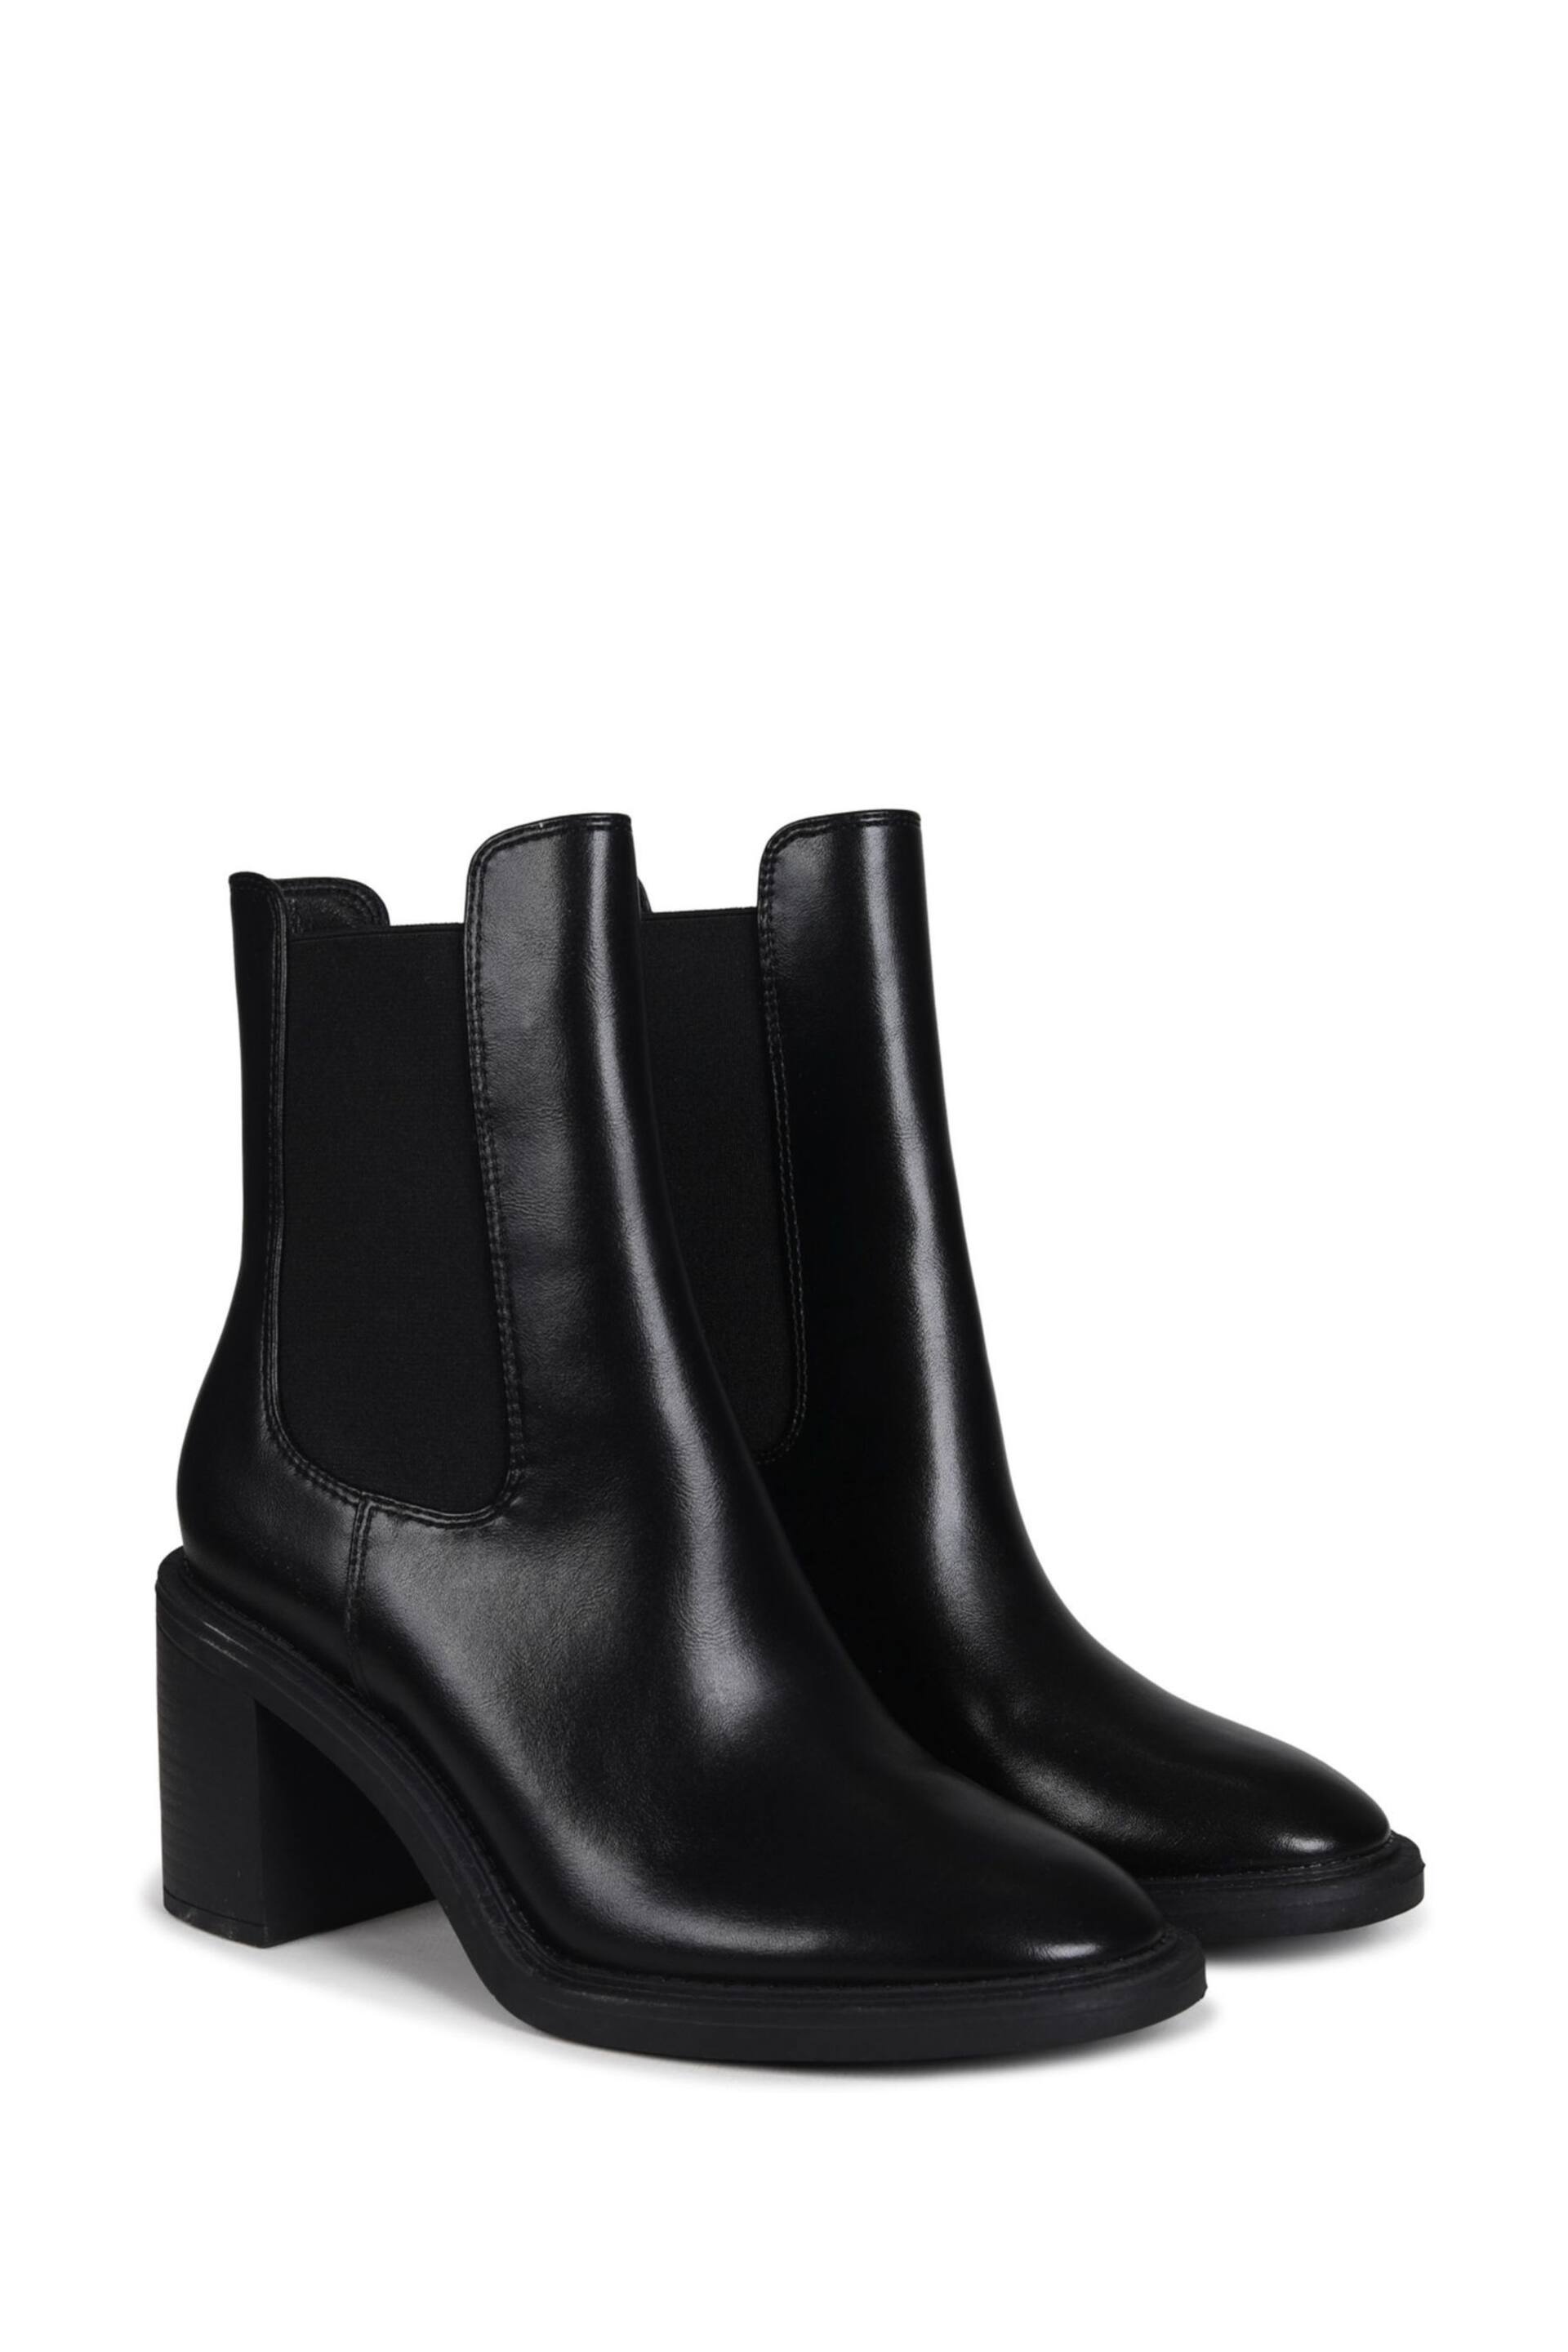 Linzi Black Erica Pull On Heeled Chelsea Boots - Image 3 of 4